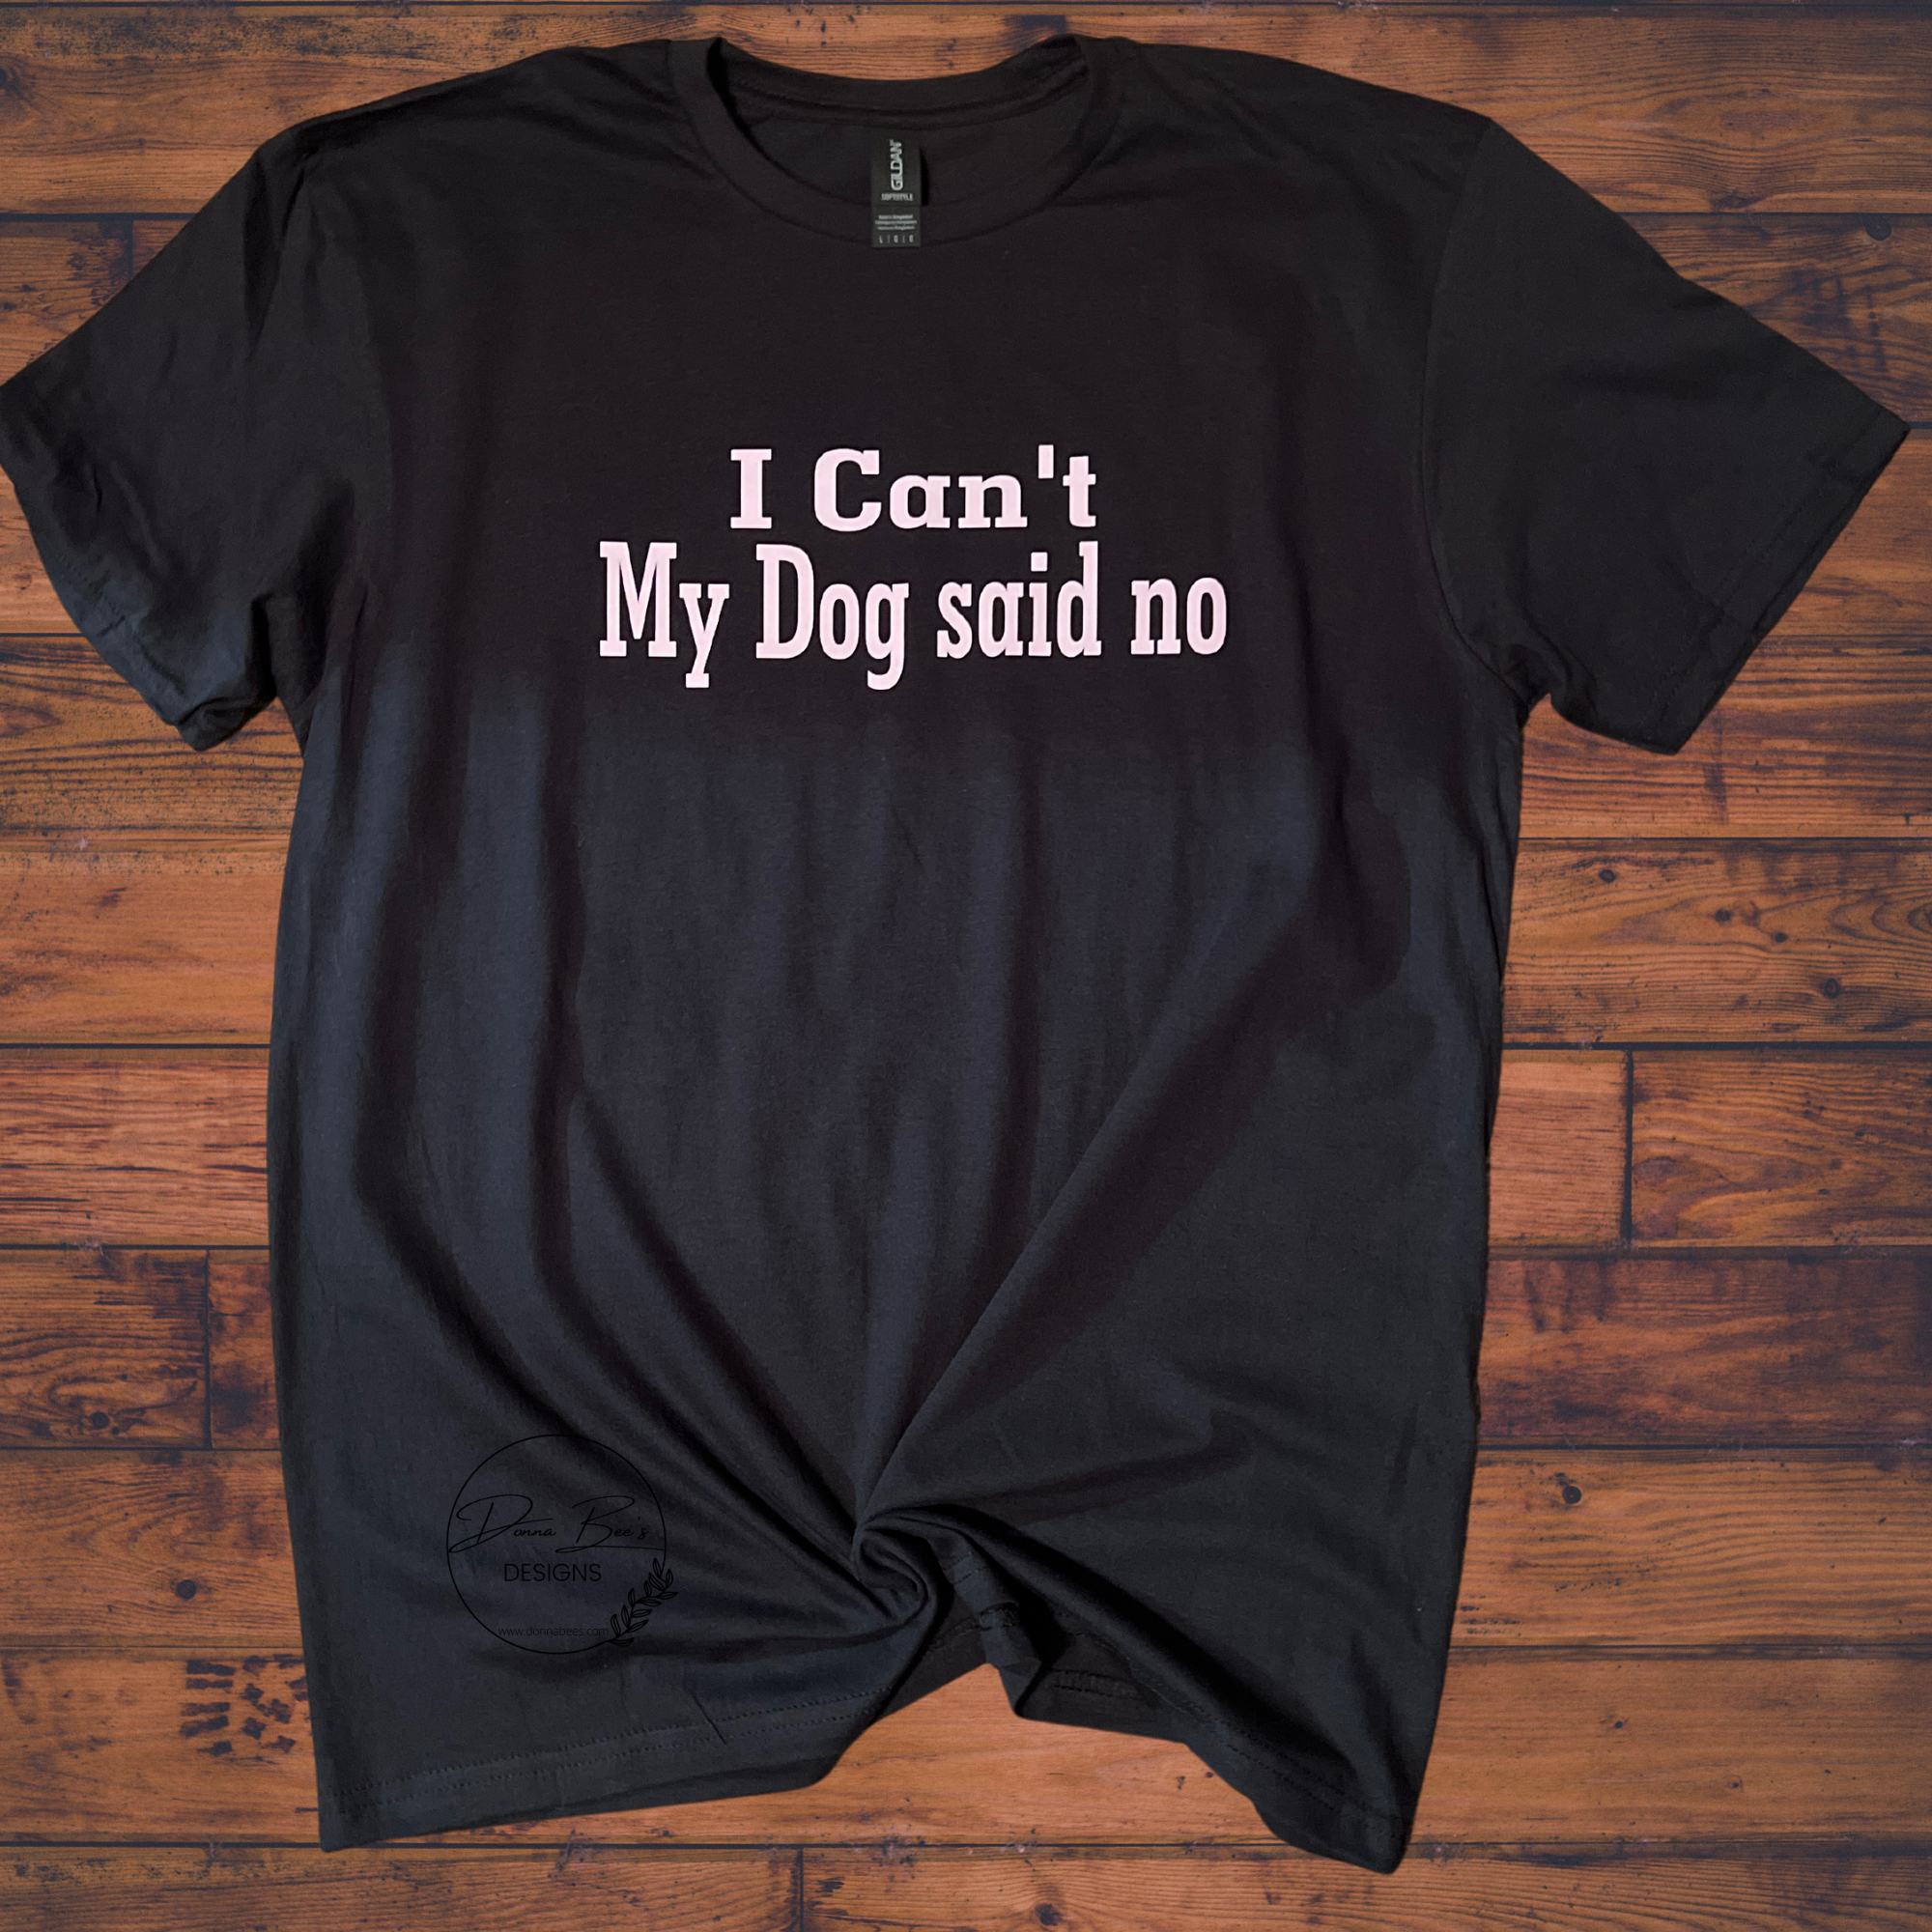 I can’t my dog said no t-shirt | Dog lover tee|